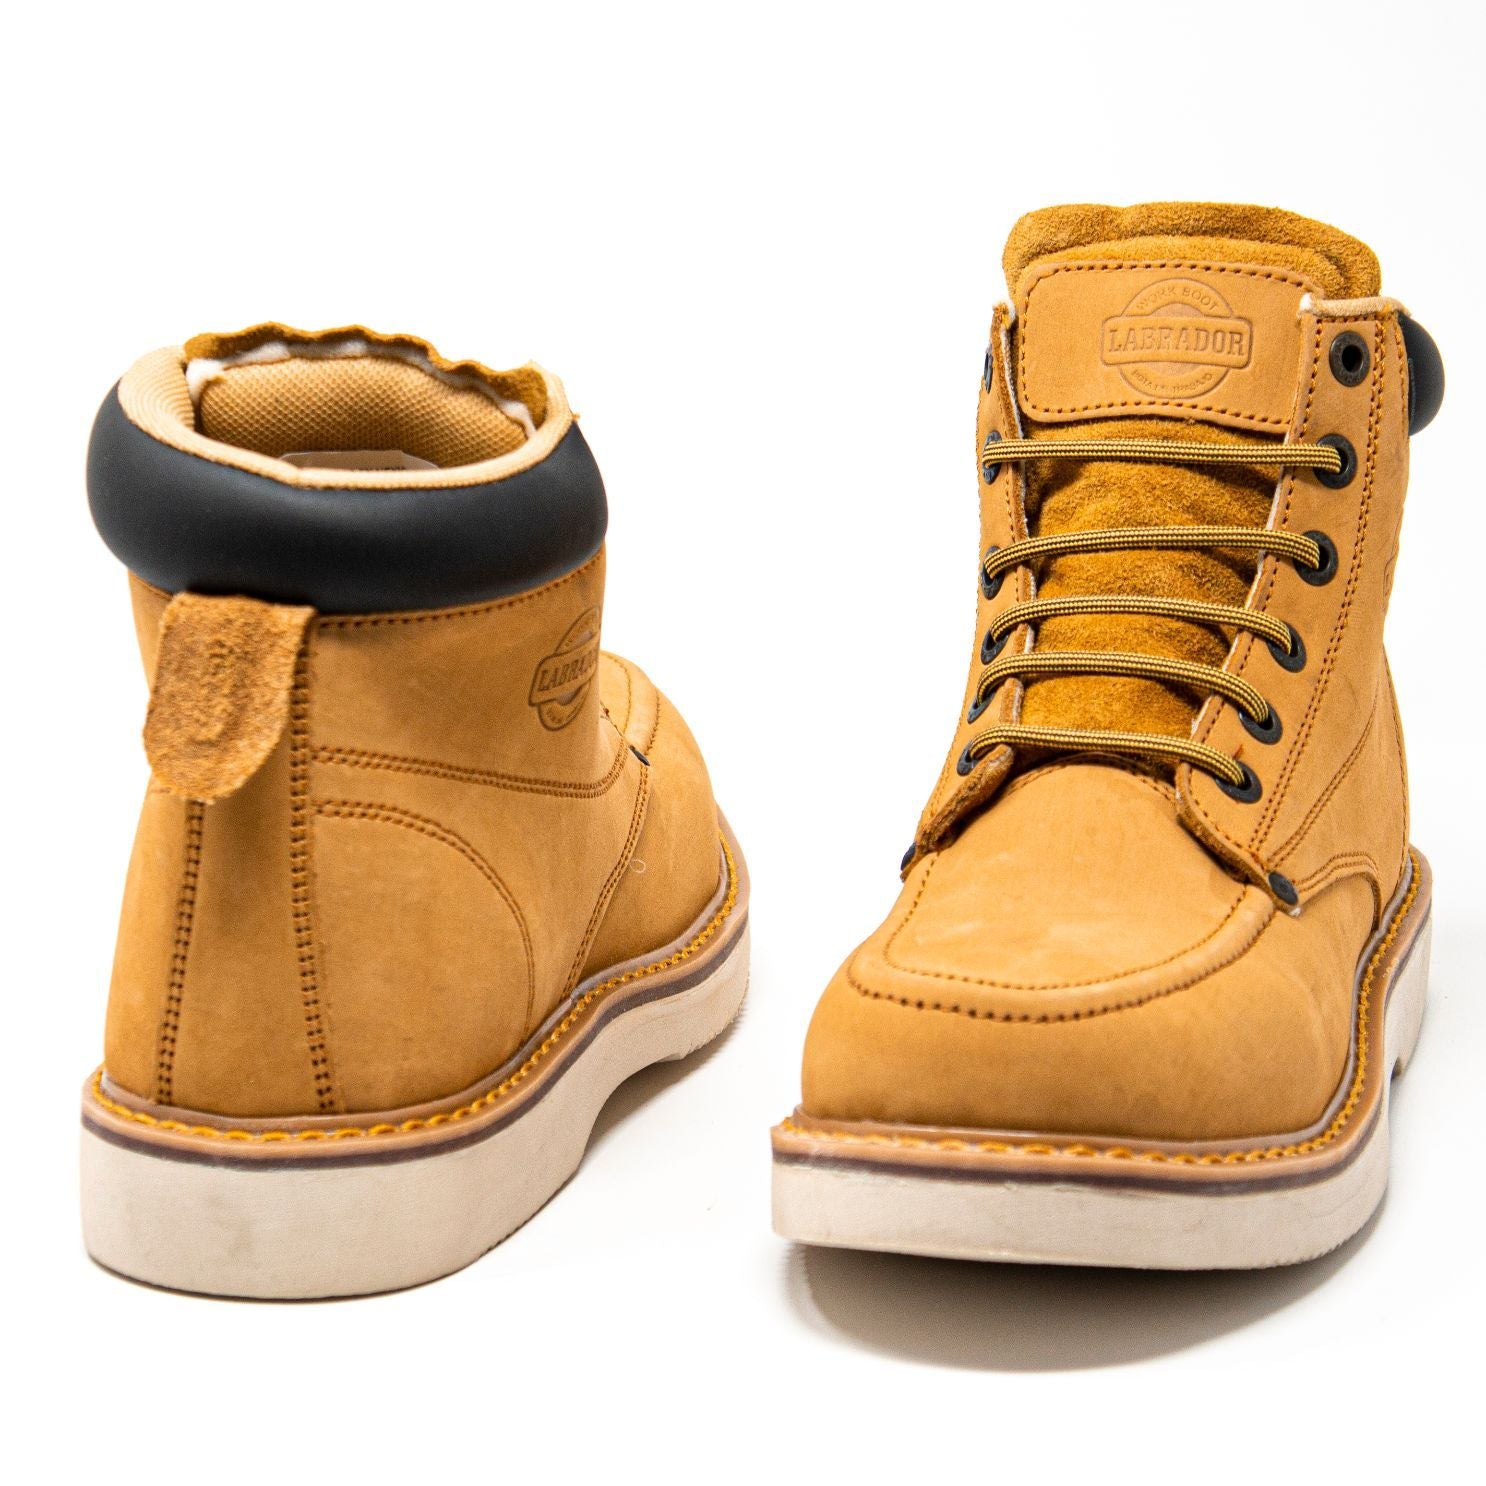 Men's Work Boots - Wedge Sole & Lightweight - Tan Work Boots - Labrador - 6" Work Boots - Honey 6in Work Boots